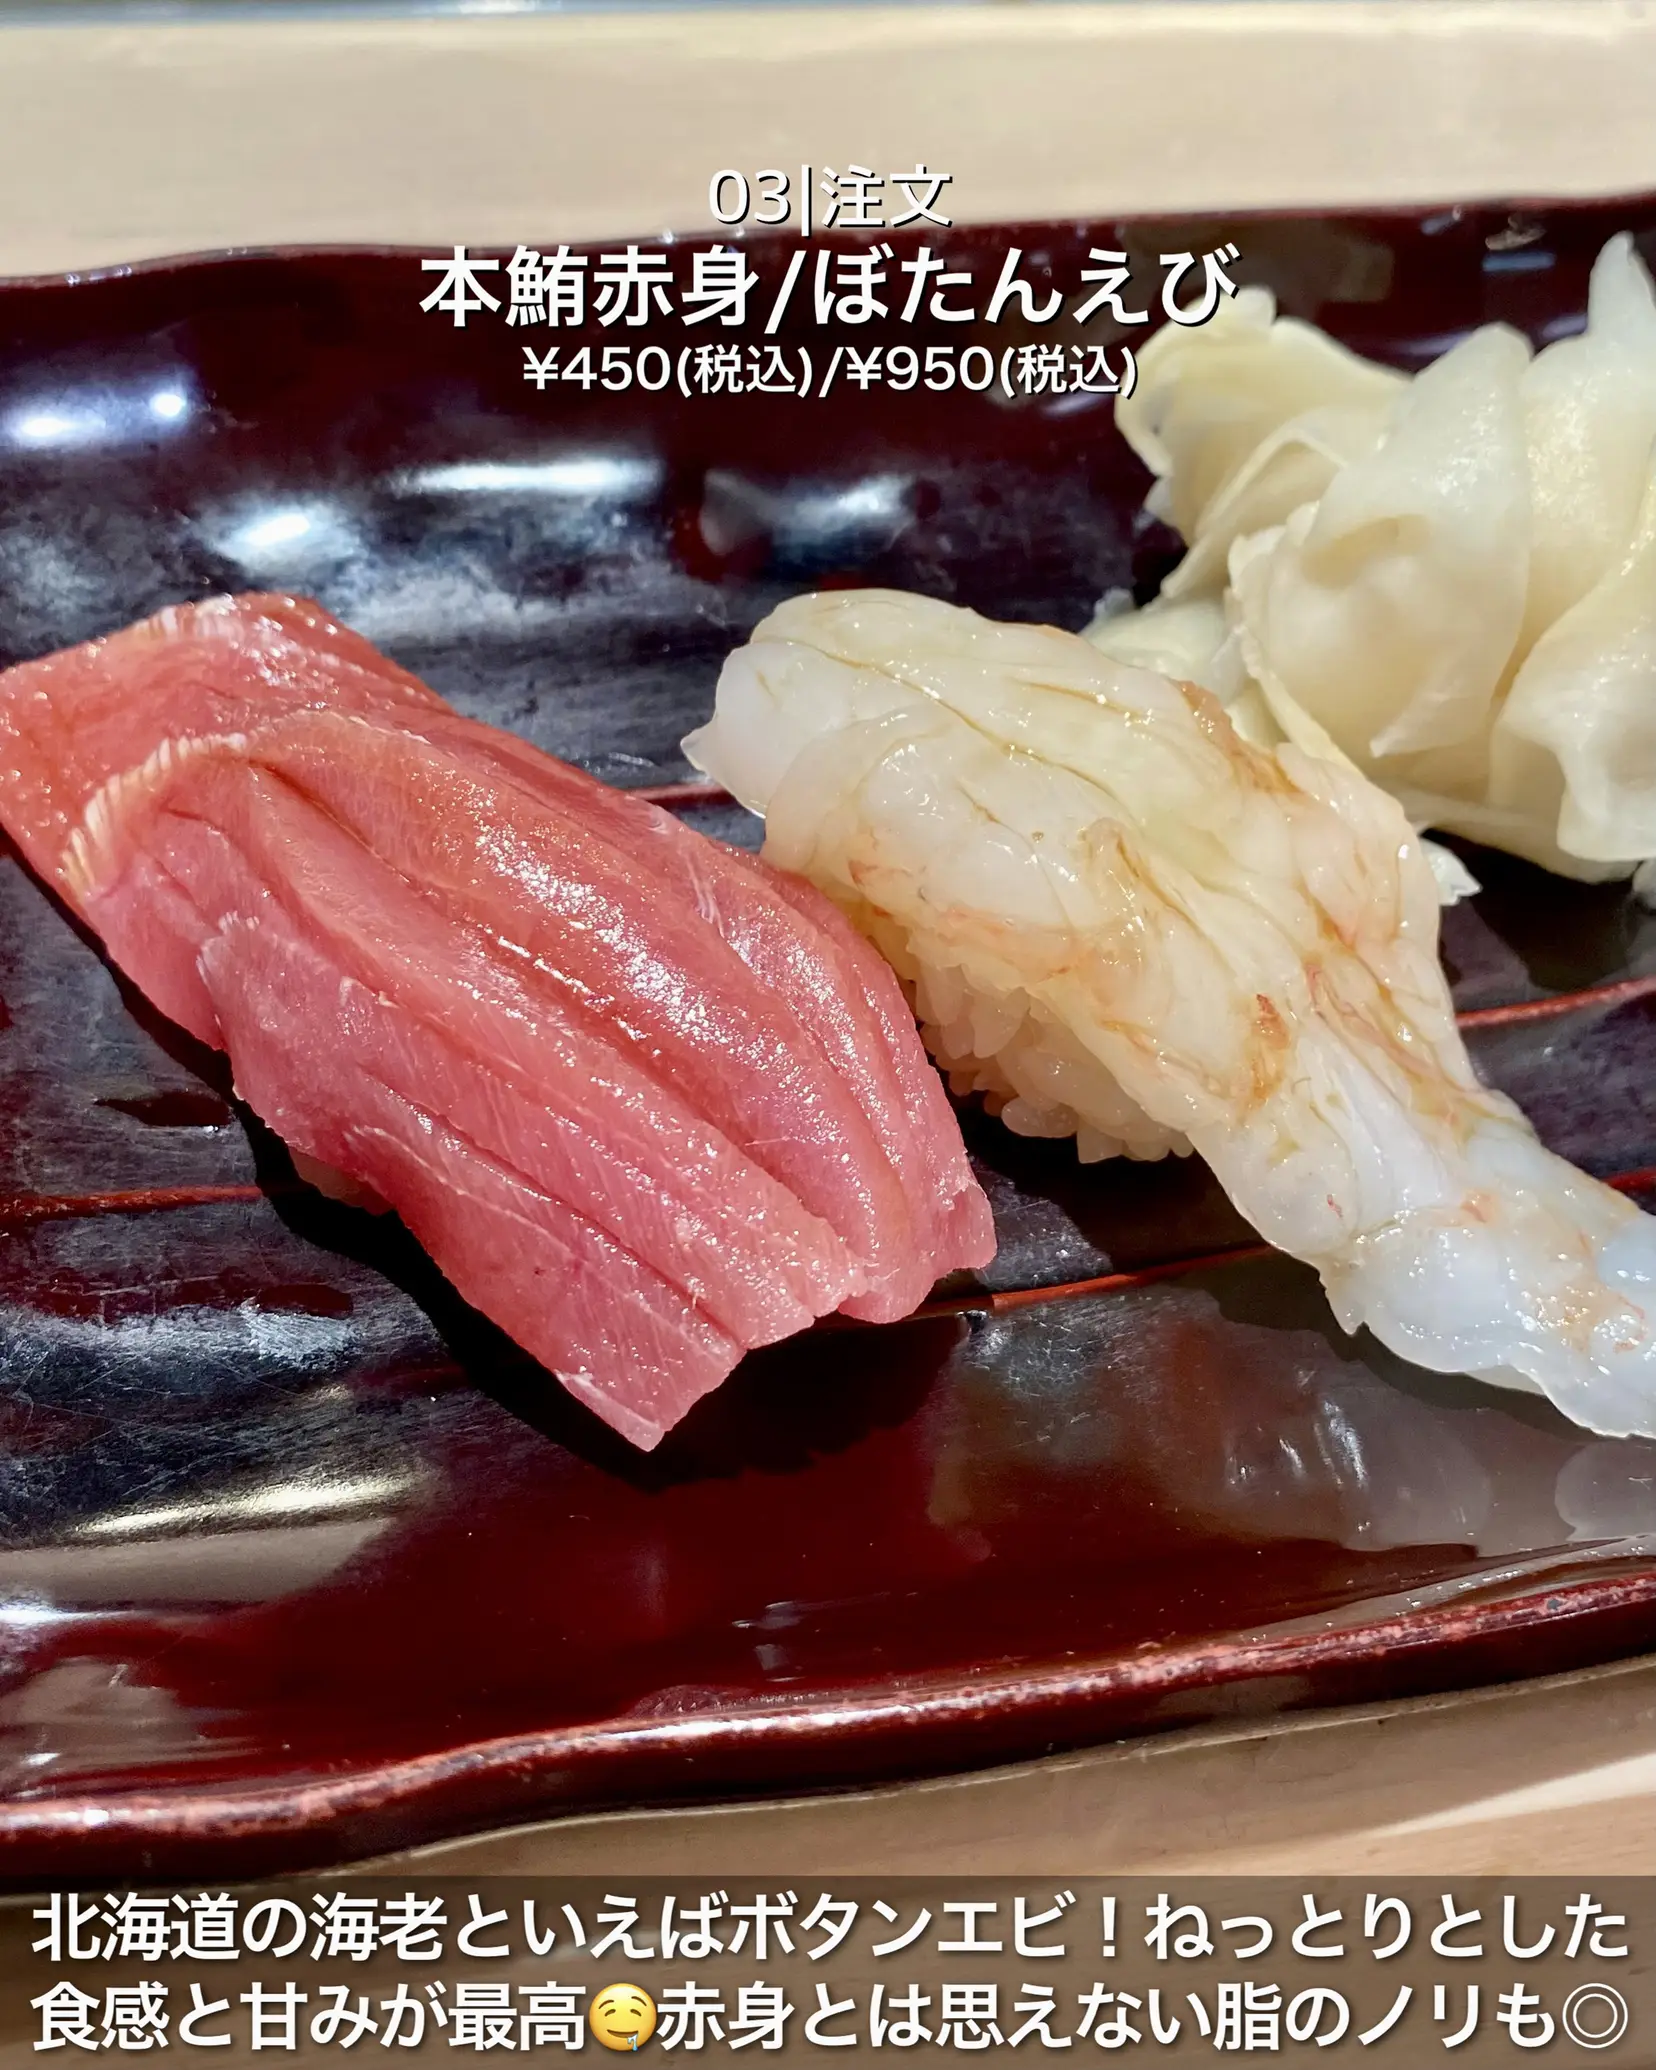 Sushi supplies from H Mart, Salmon and Tuna Sashimi Sushi s…